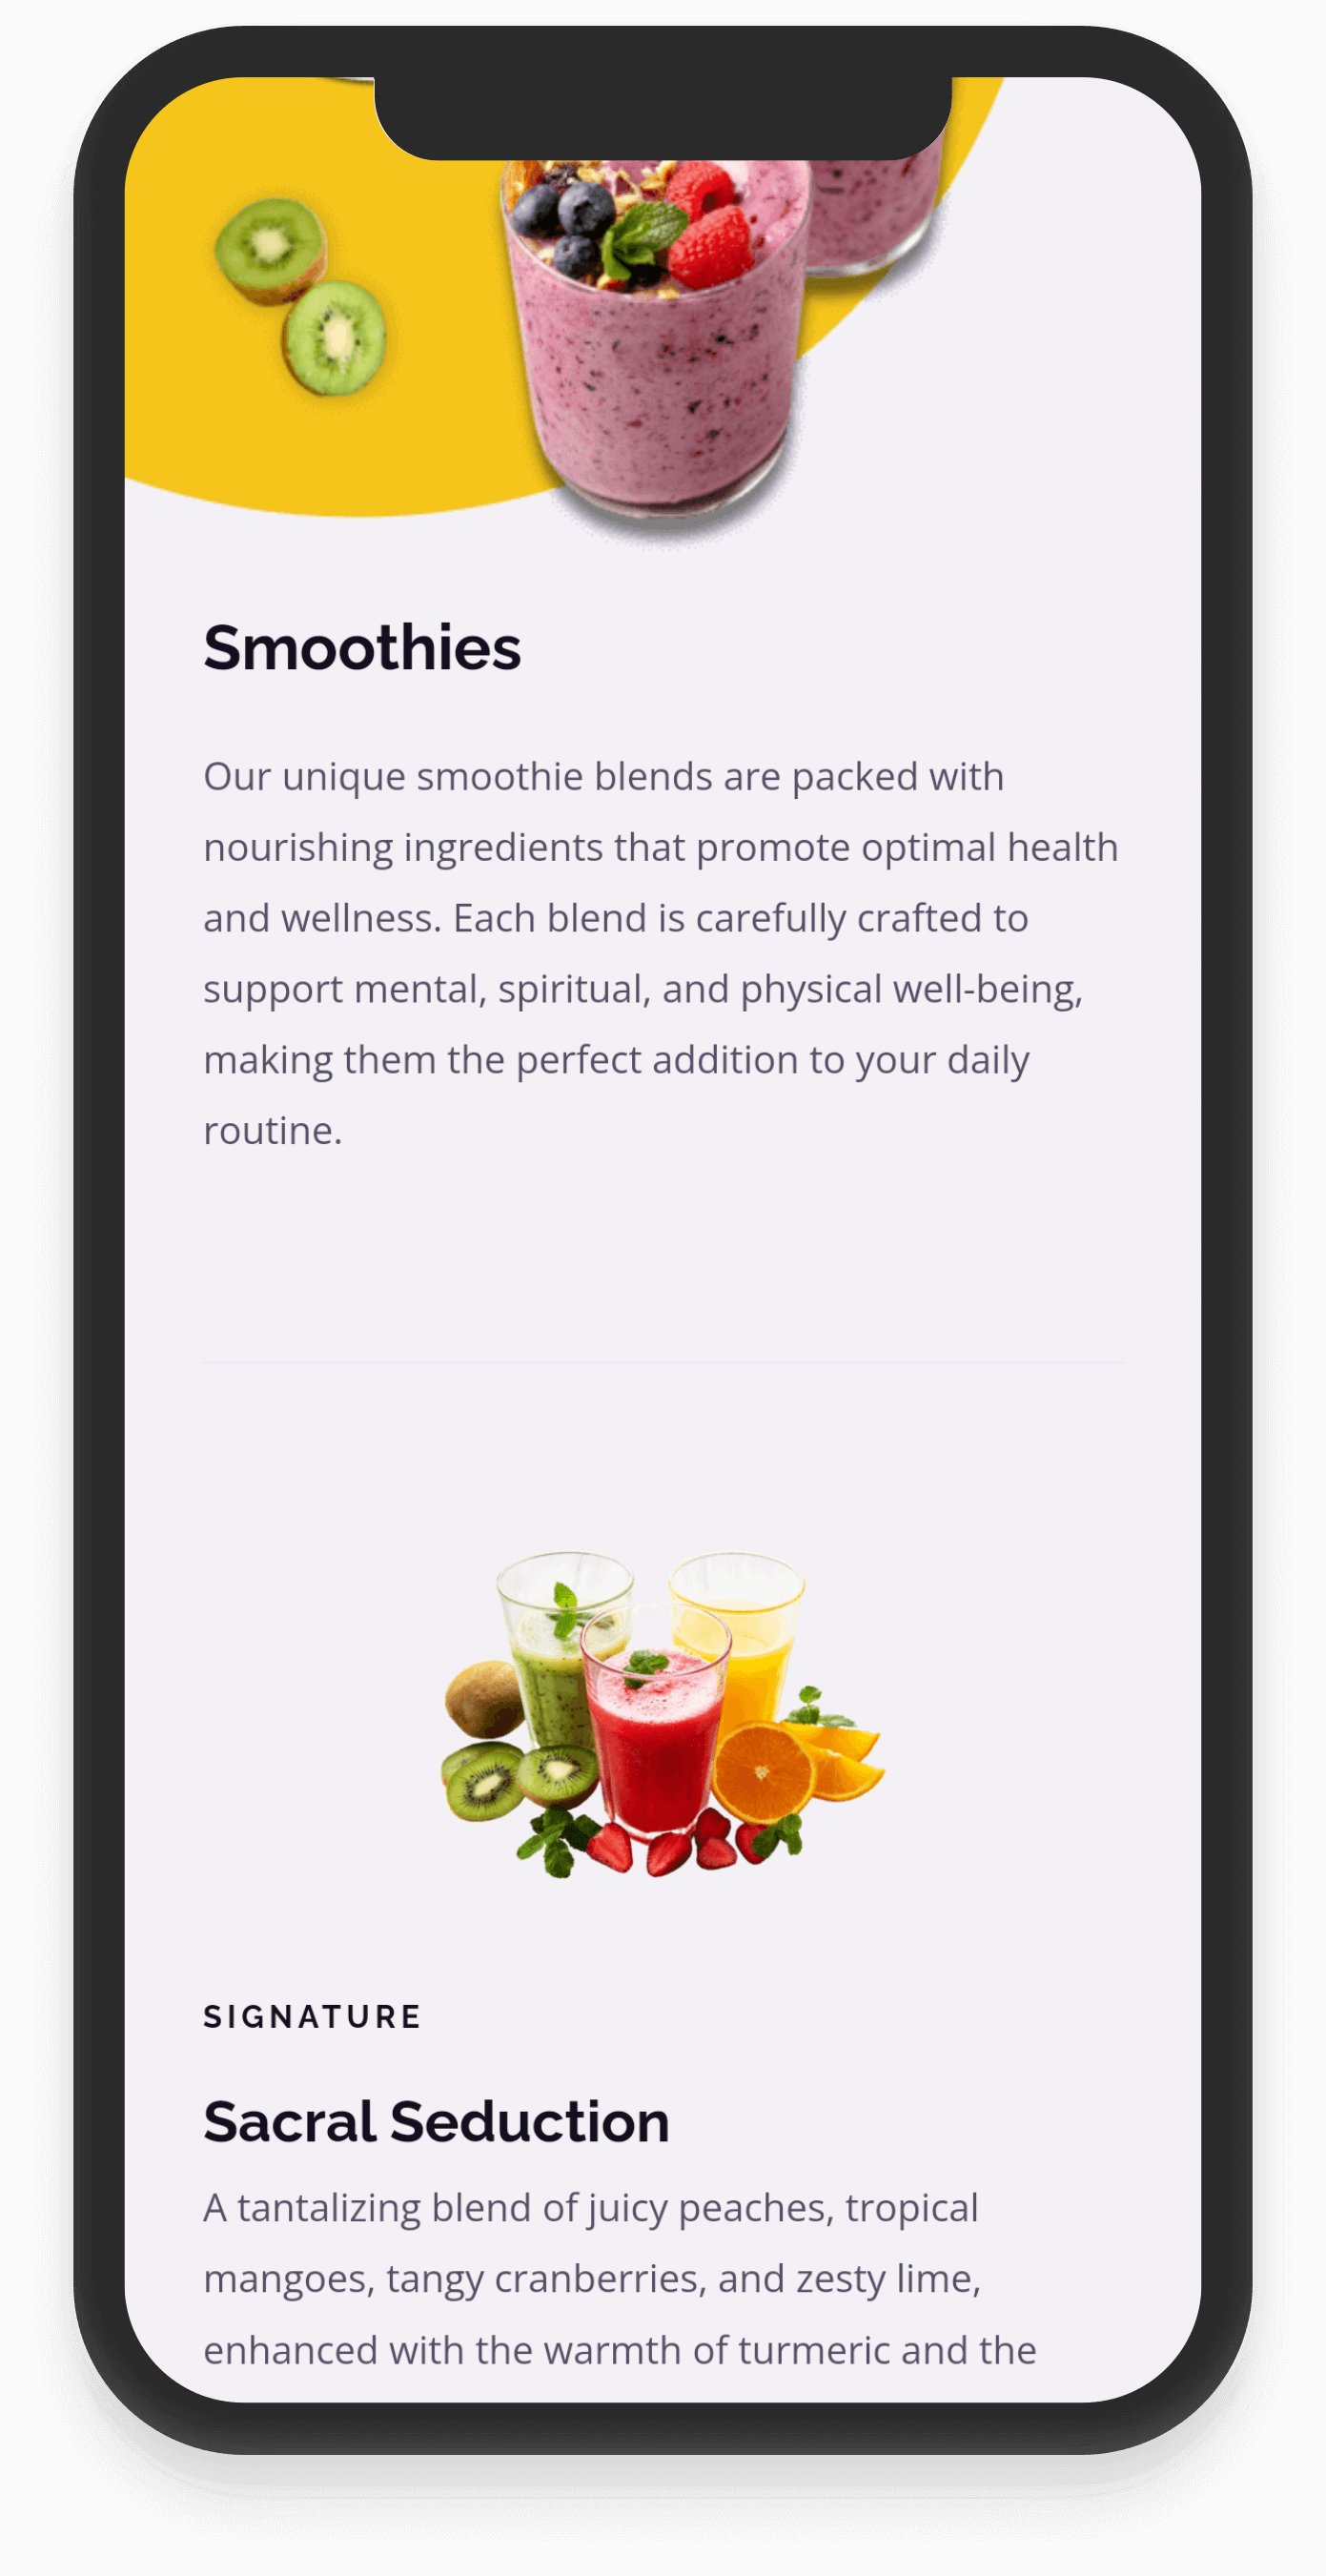 Mobile view of ajnacaya.com smoothie menu web page